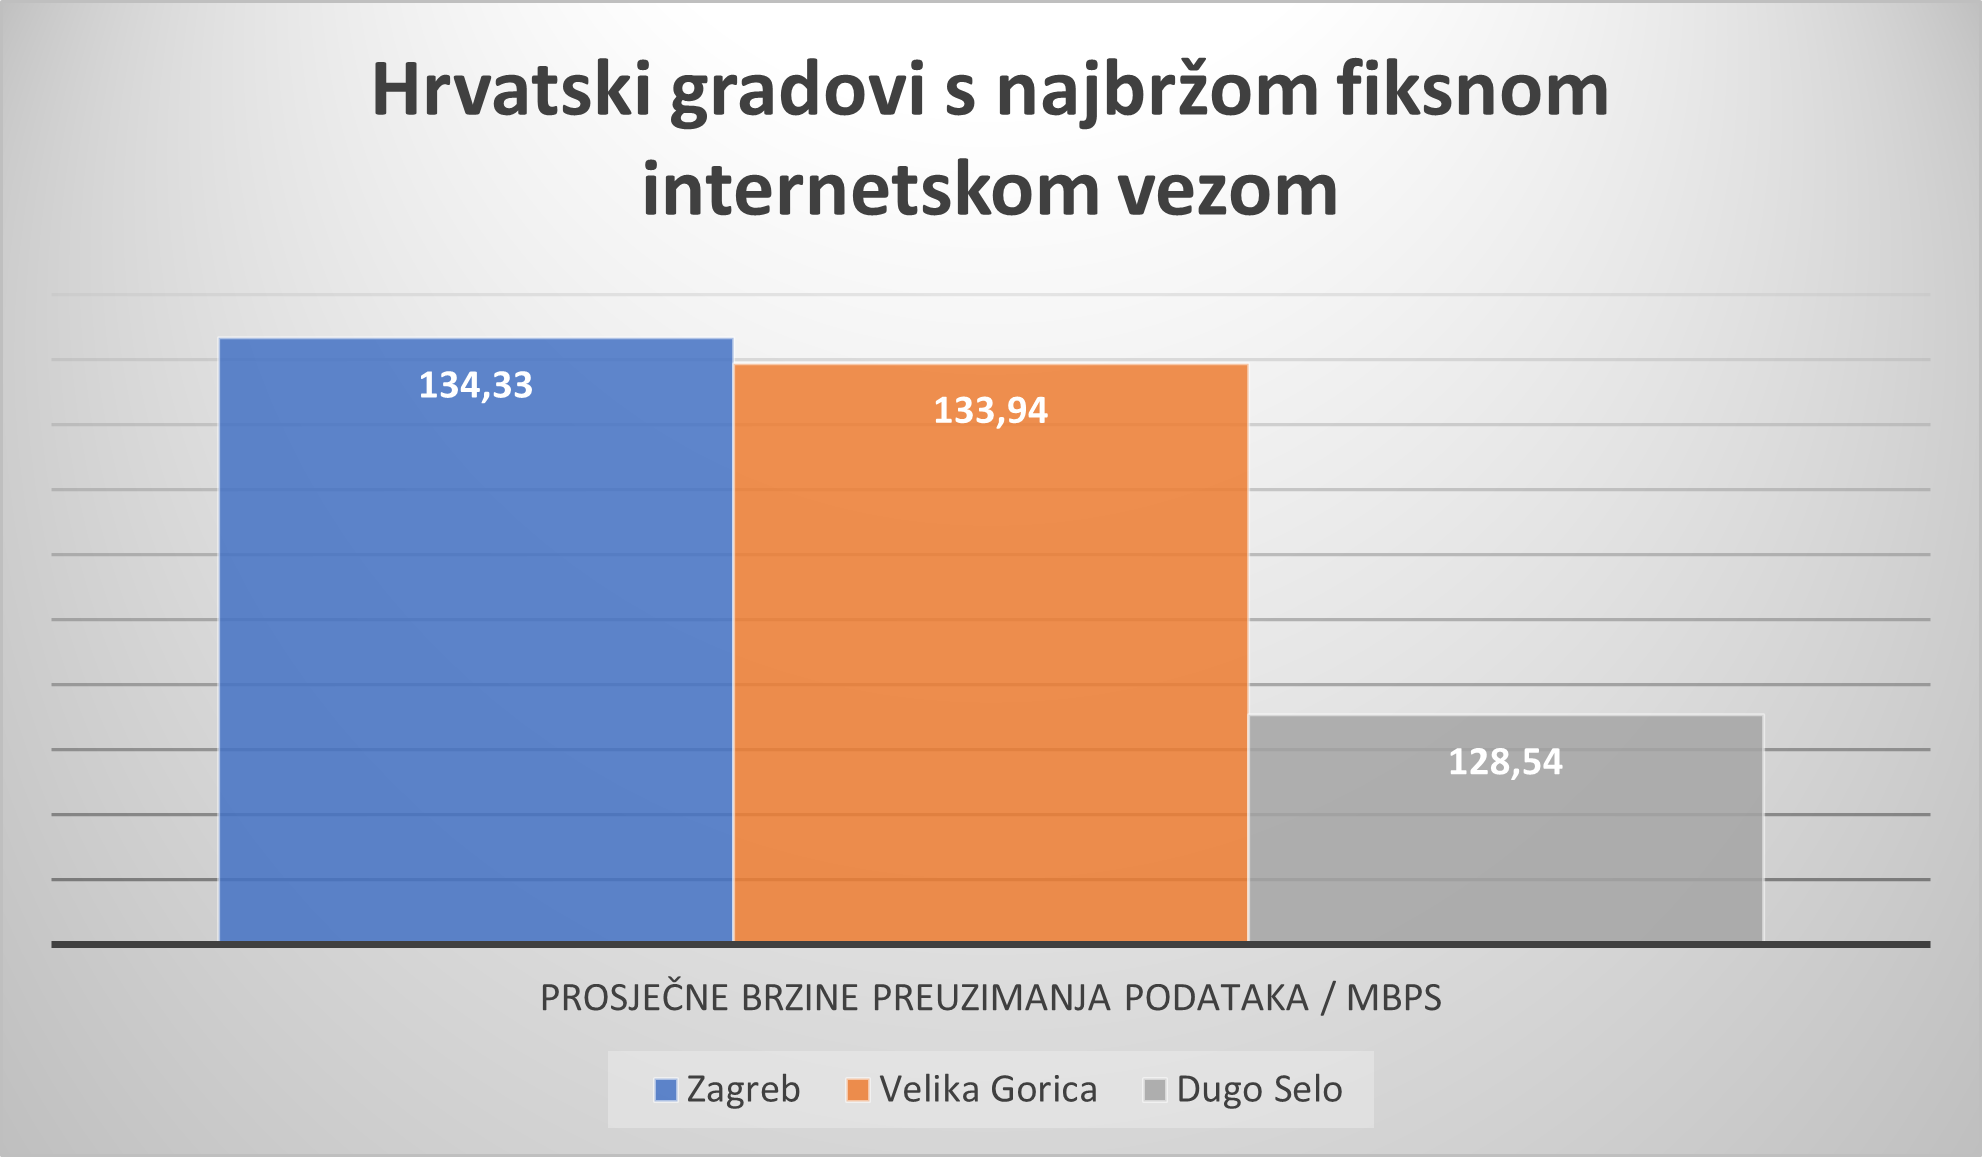 Hrvatski gradovi s najbržom fiksnom internetskom vezom